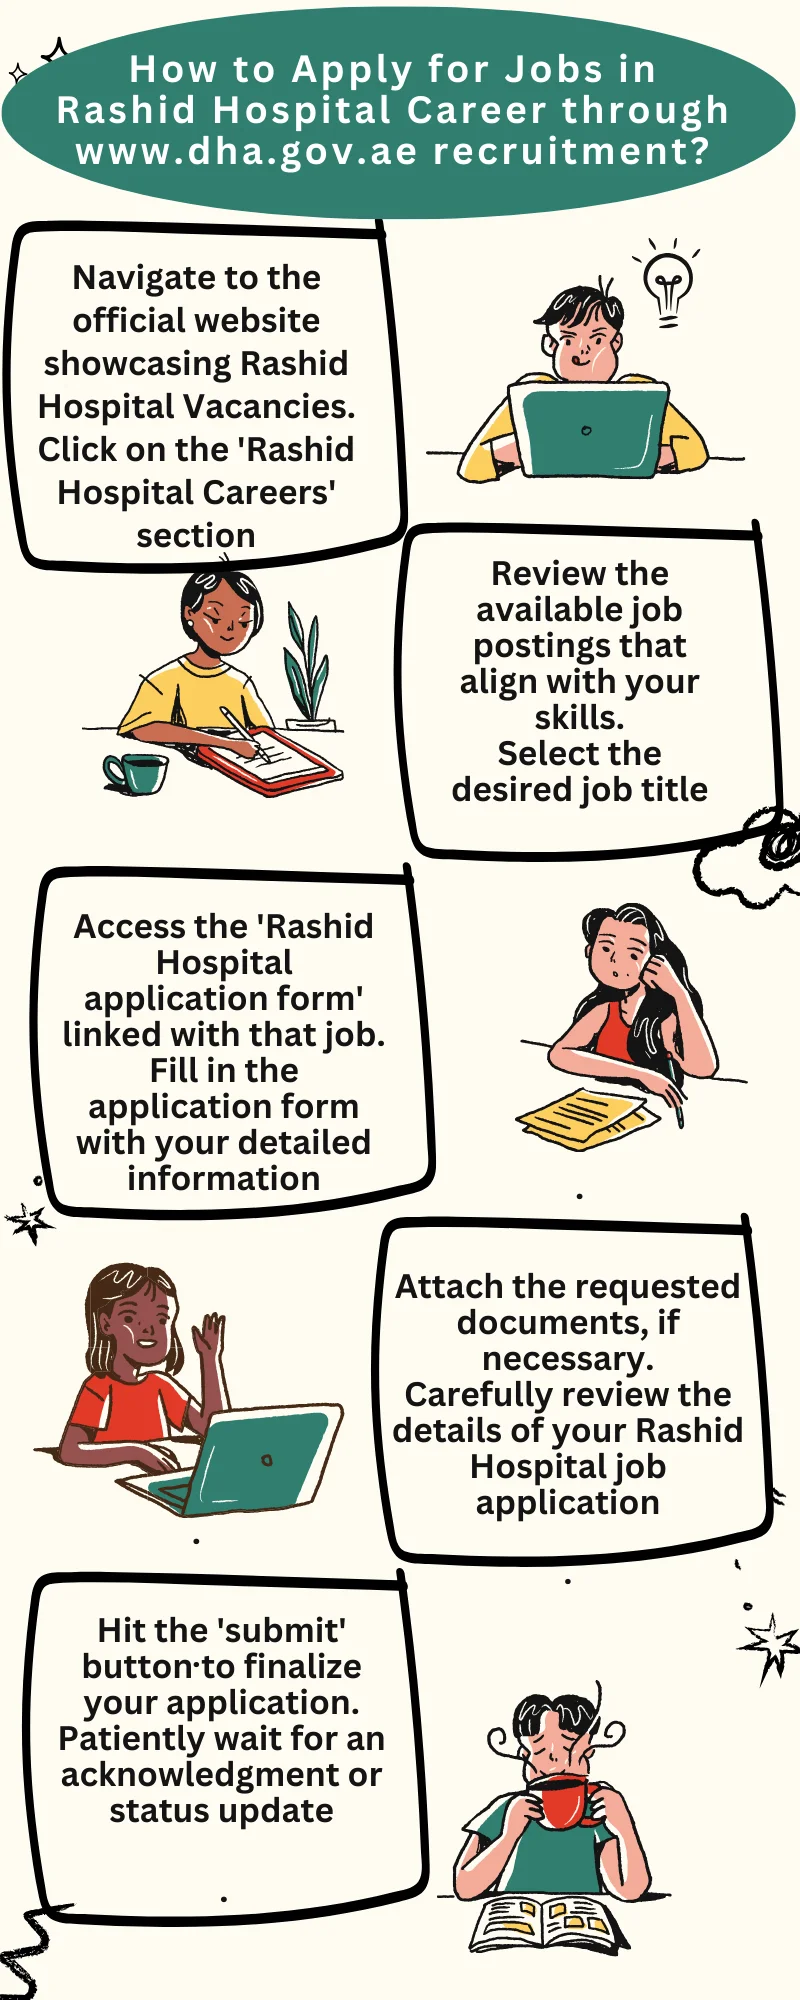 How to Apply for Jobs in Rashid Hospital Career through www.dha.gov.ae recruitment?